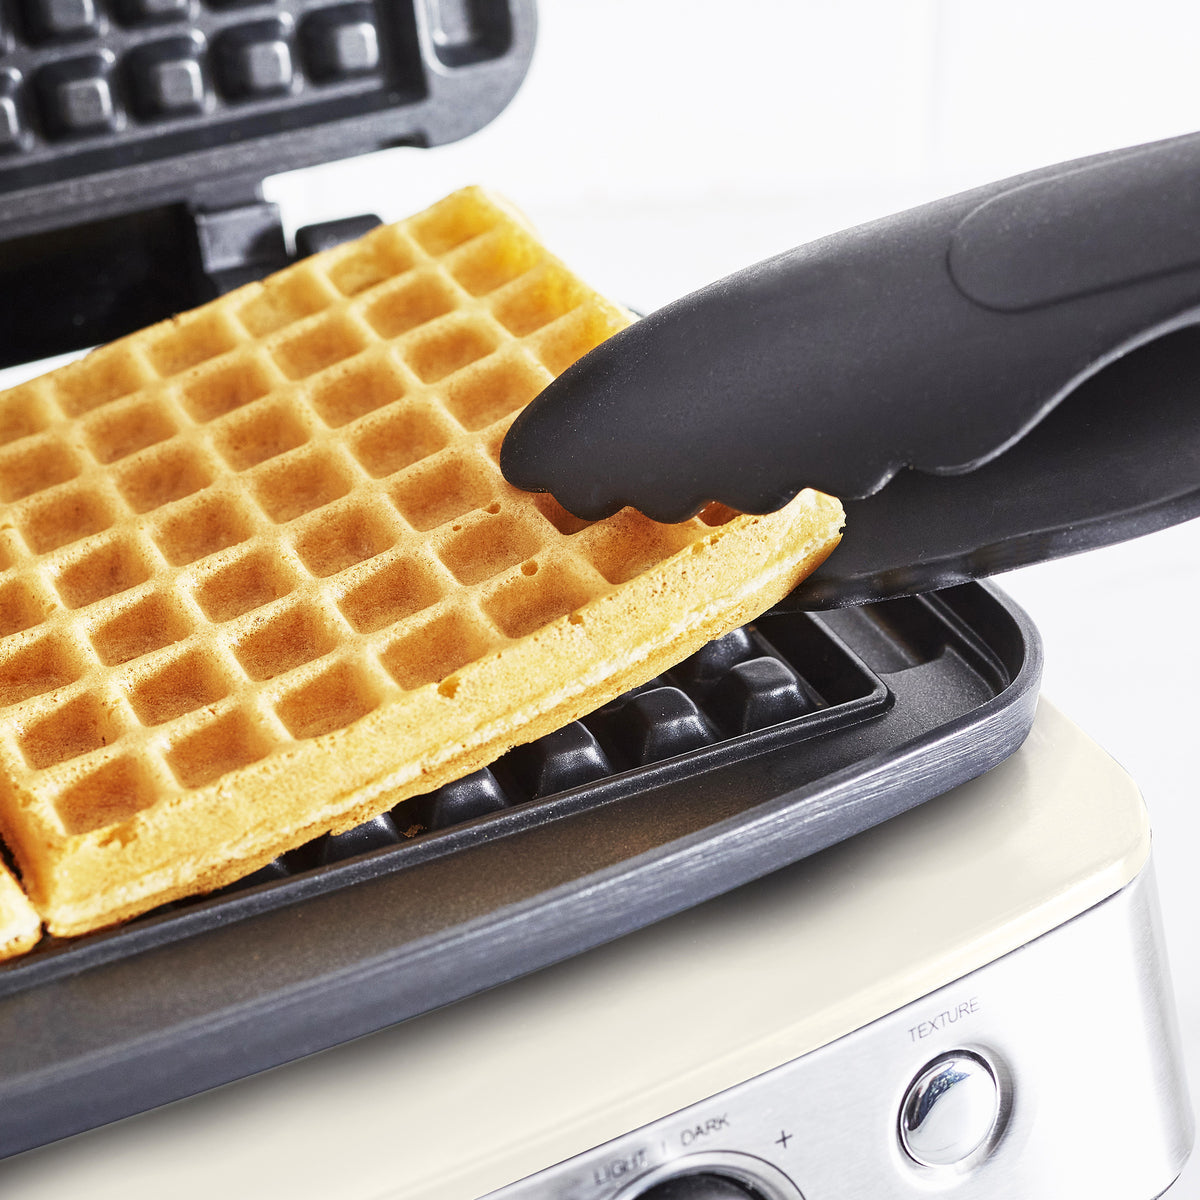 the No-mess Waffle®